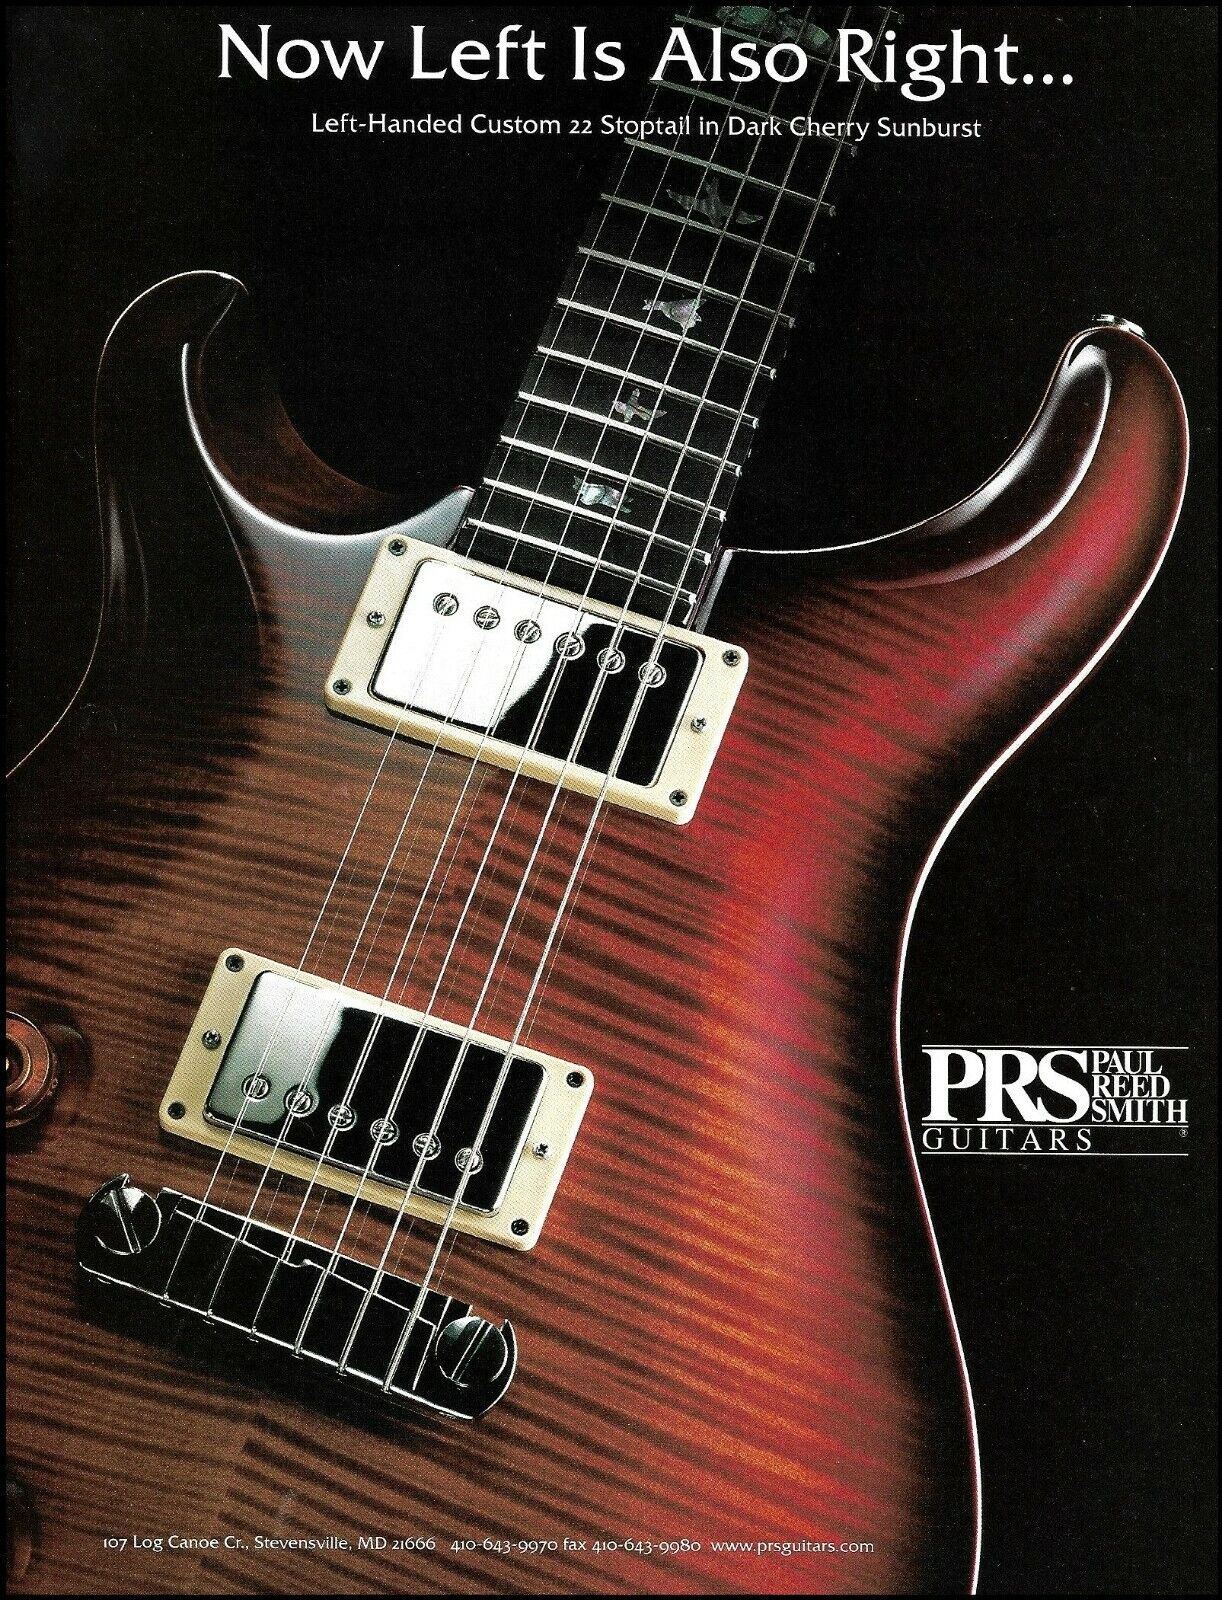 PRS Custom 22 Stoptail Left-Handed guitar advertisement 1999 ad print